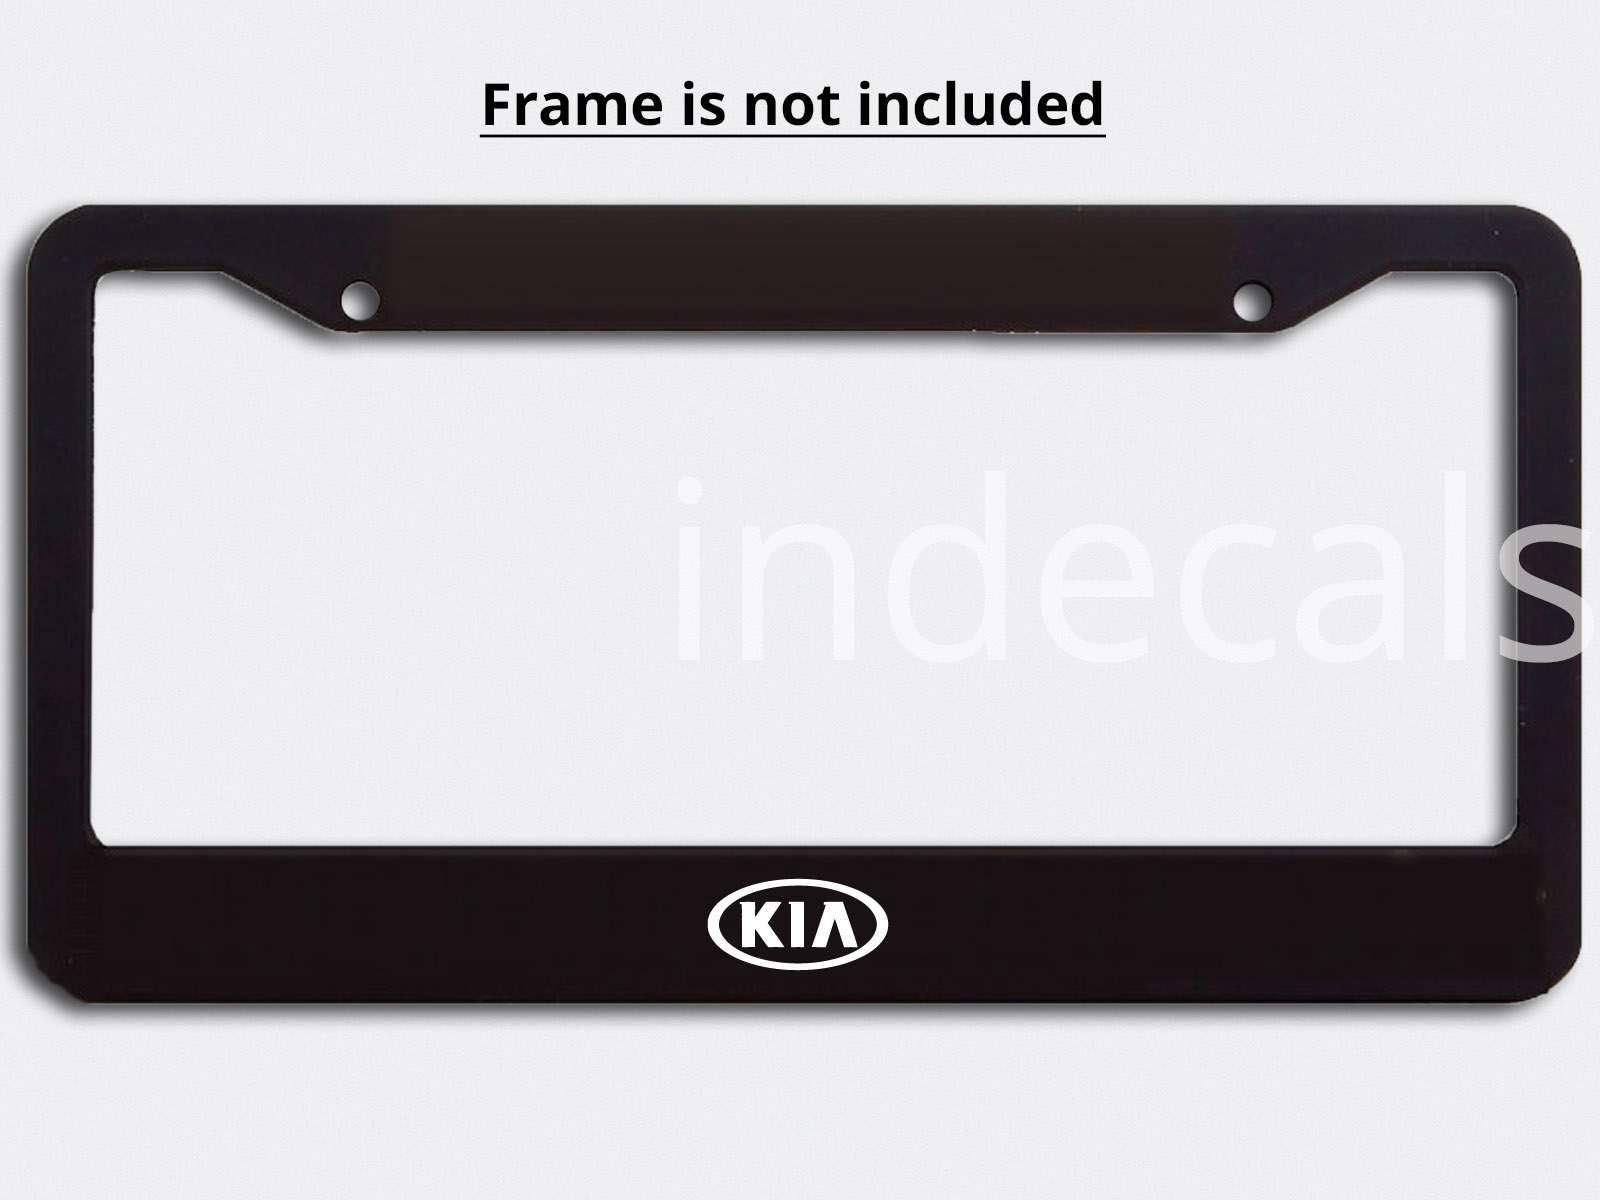 3 x KIA Stickers for License Plate Frame - White